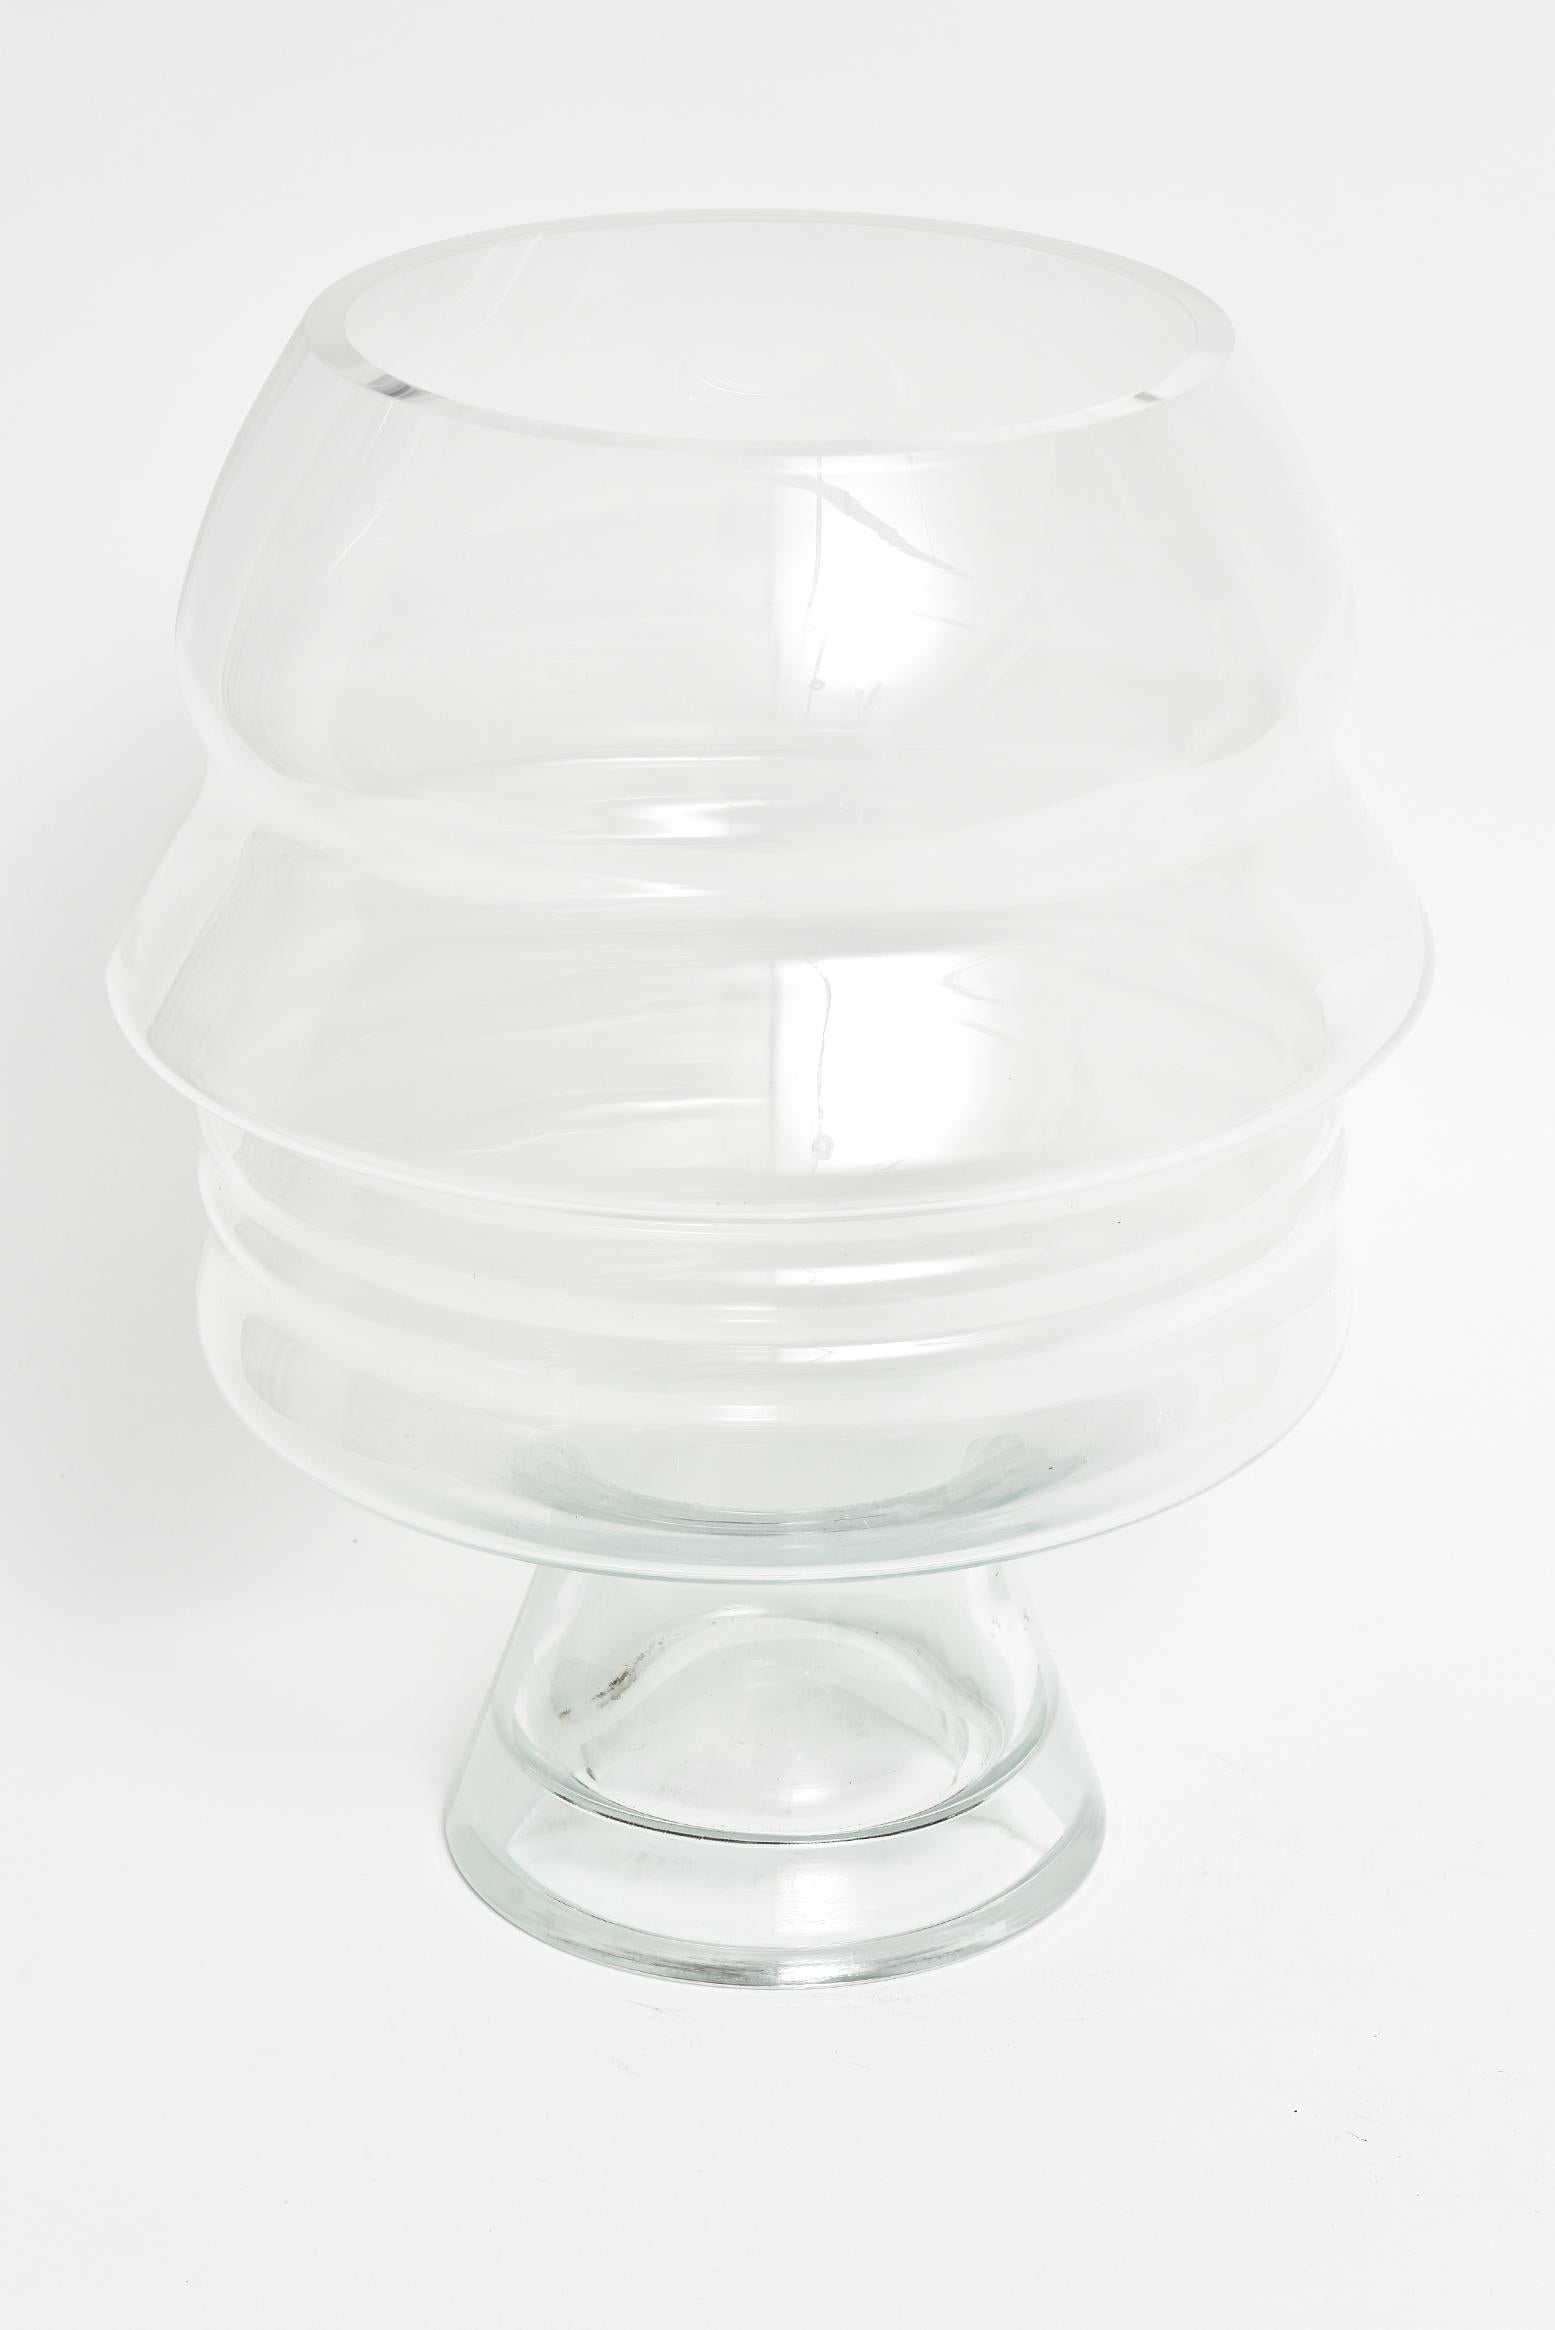 Futurist Art Glass Ego Vase by Karim Rashid like the Profile Head of Mussolini Sculpture